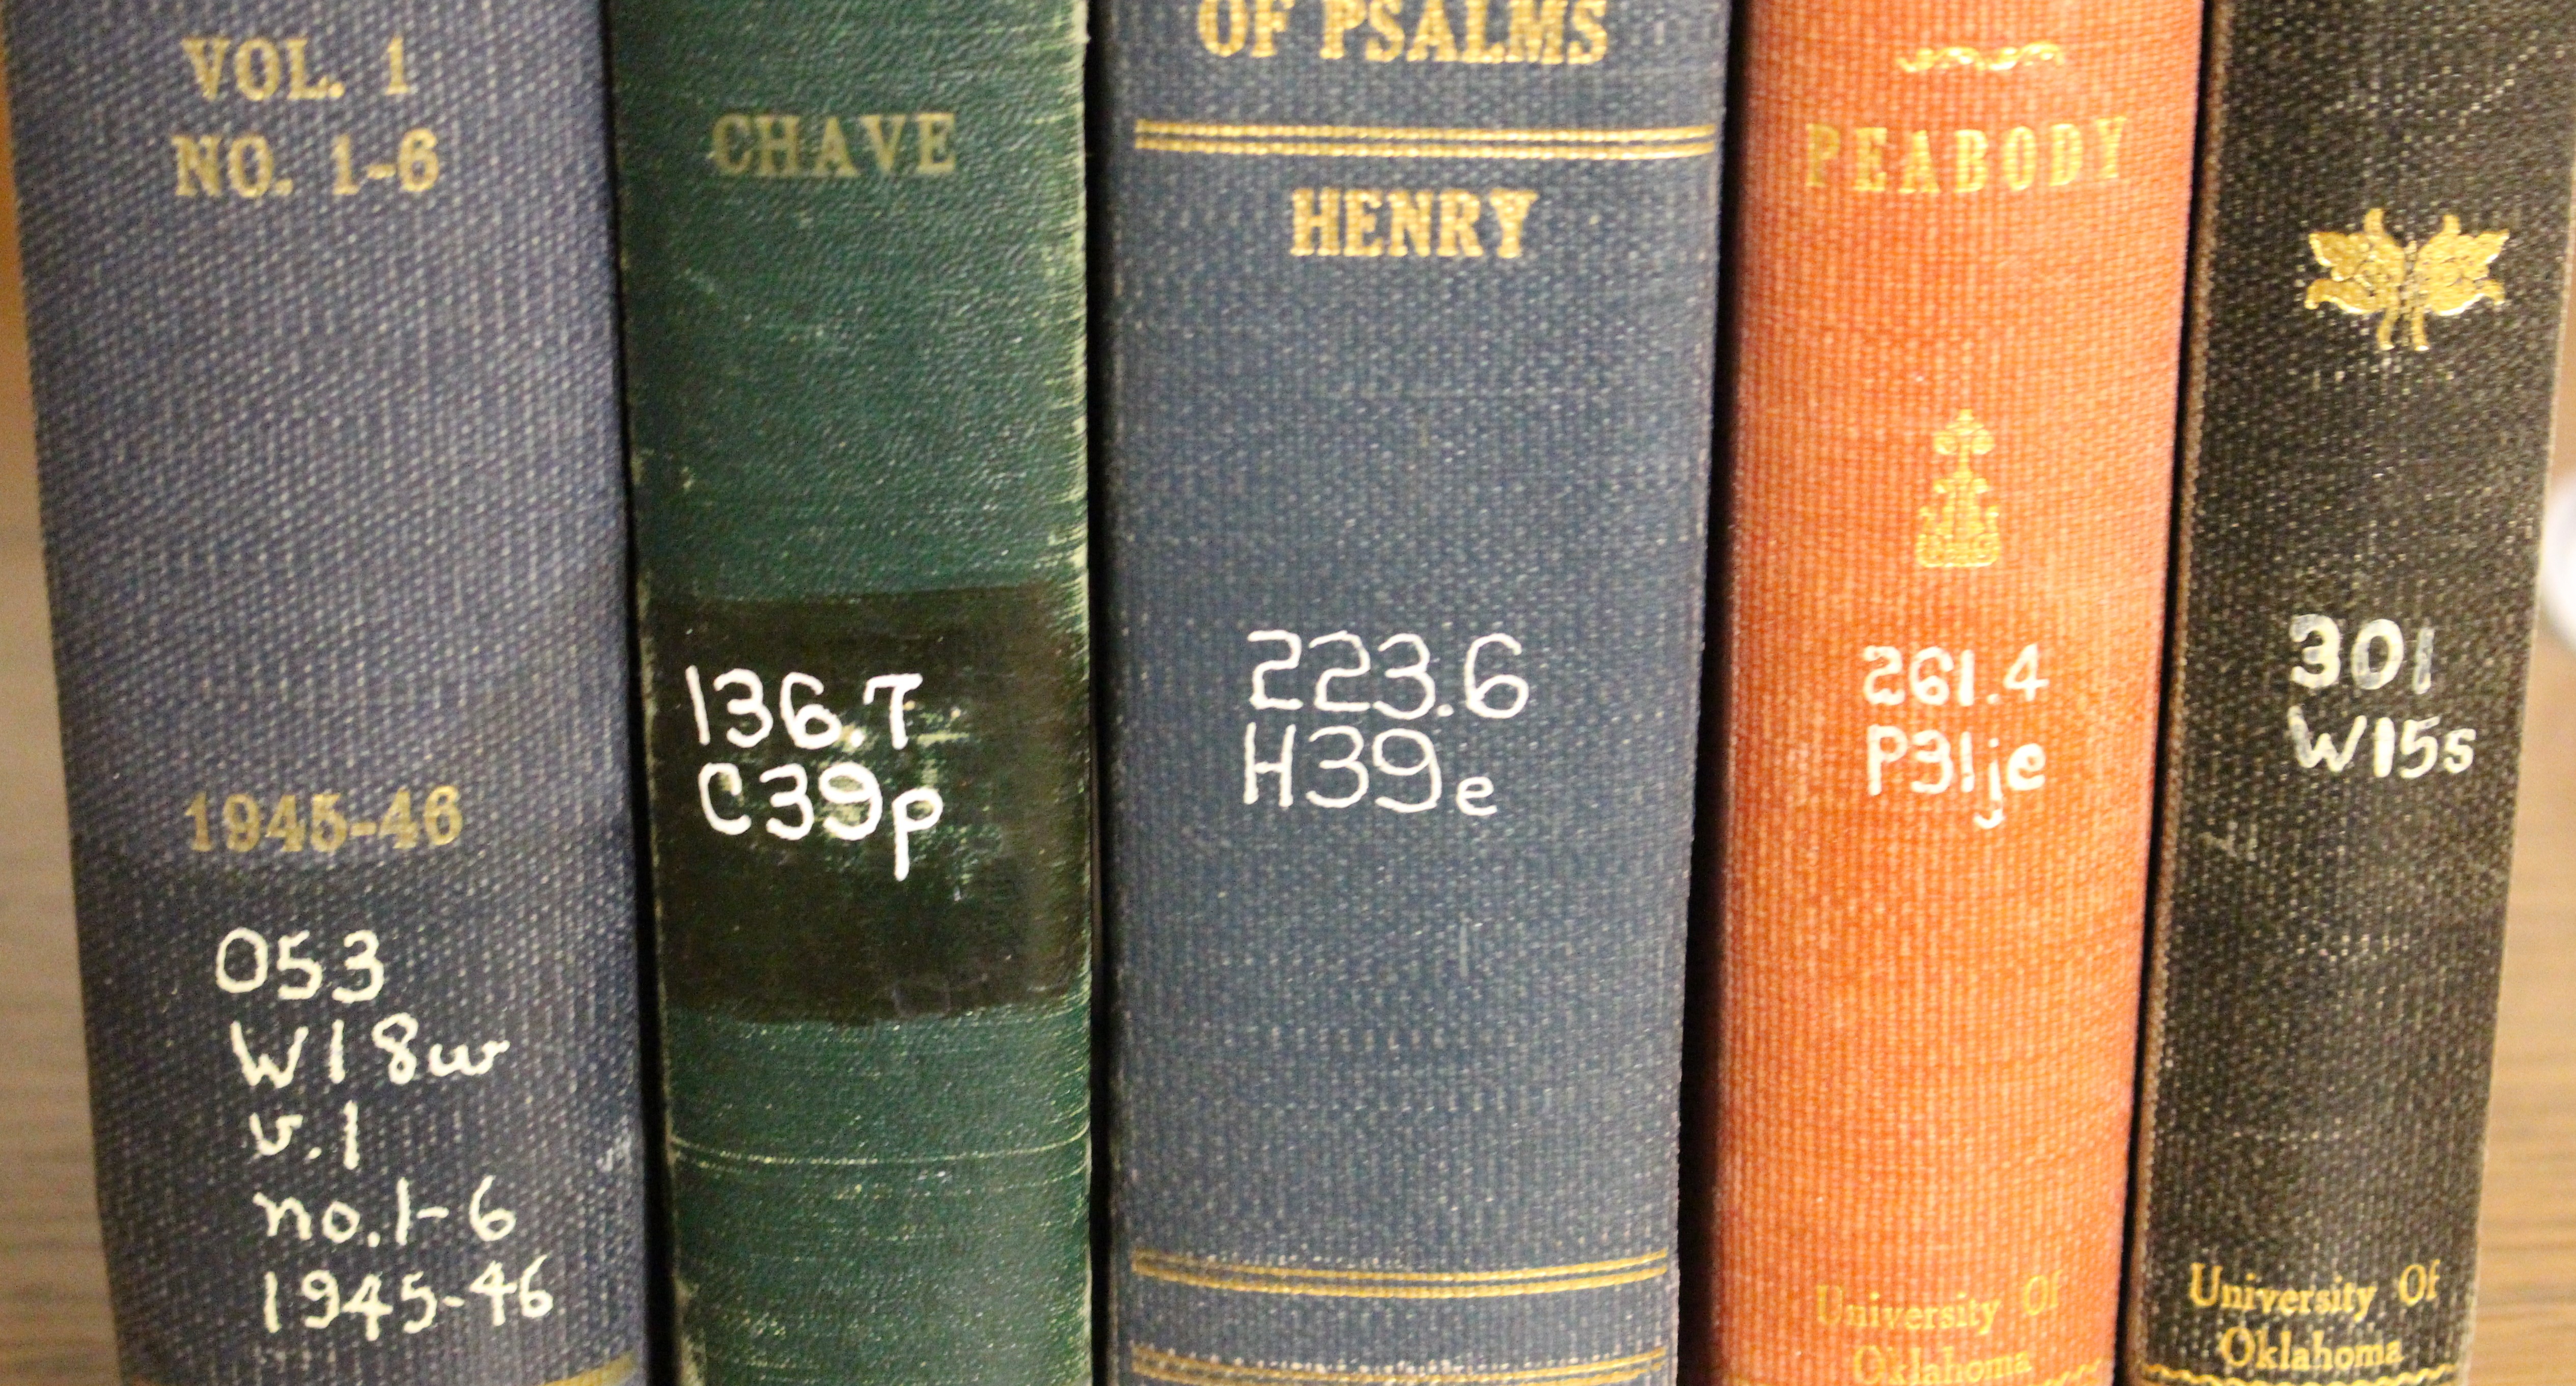 Books shelved in Dewey Decimal System